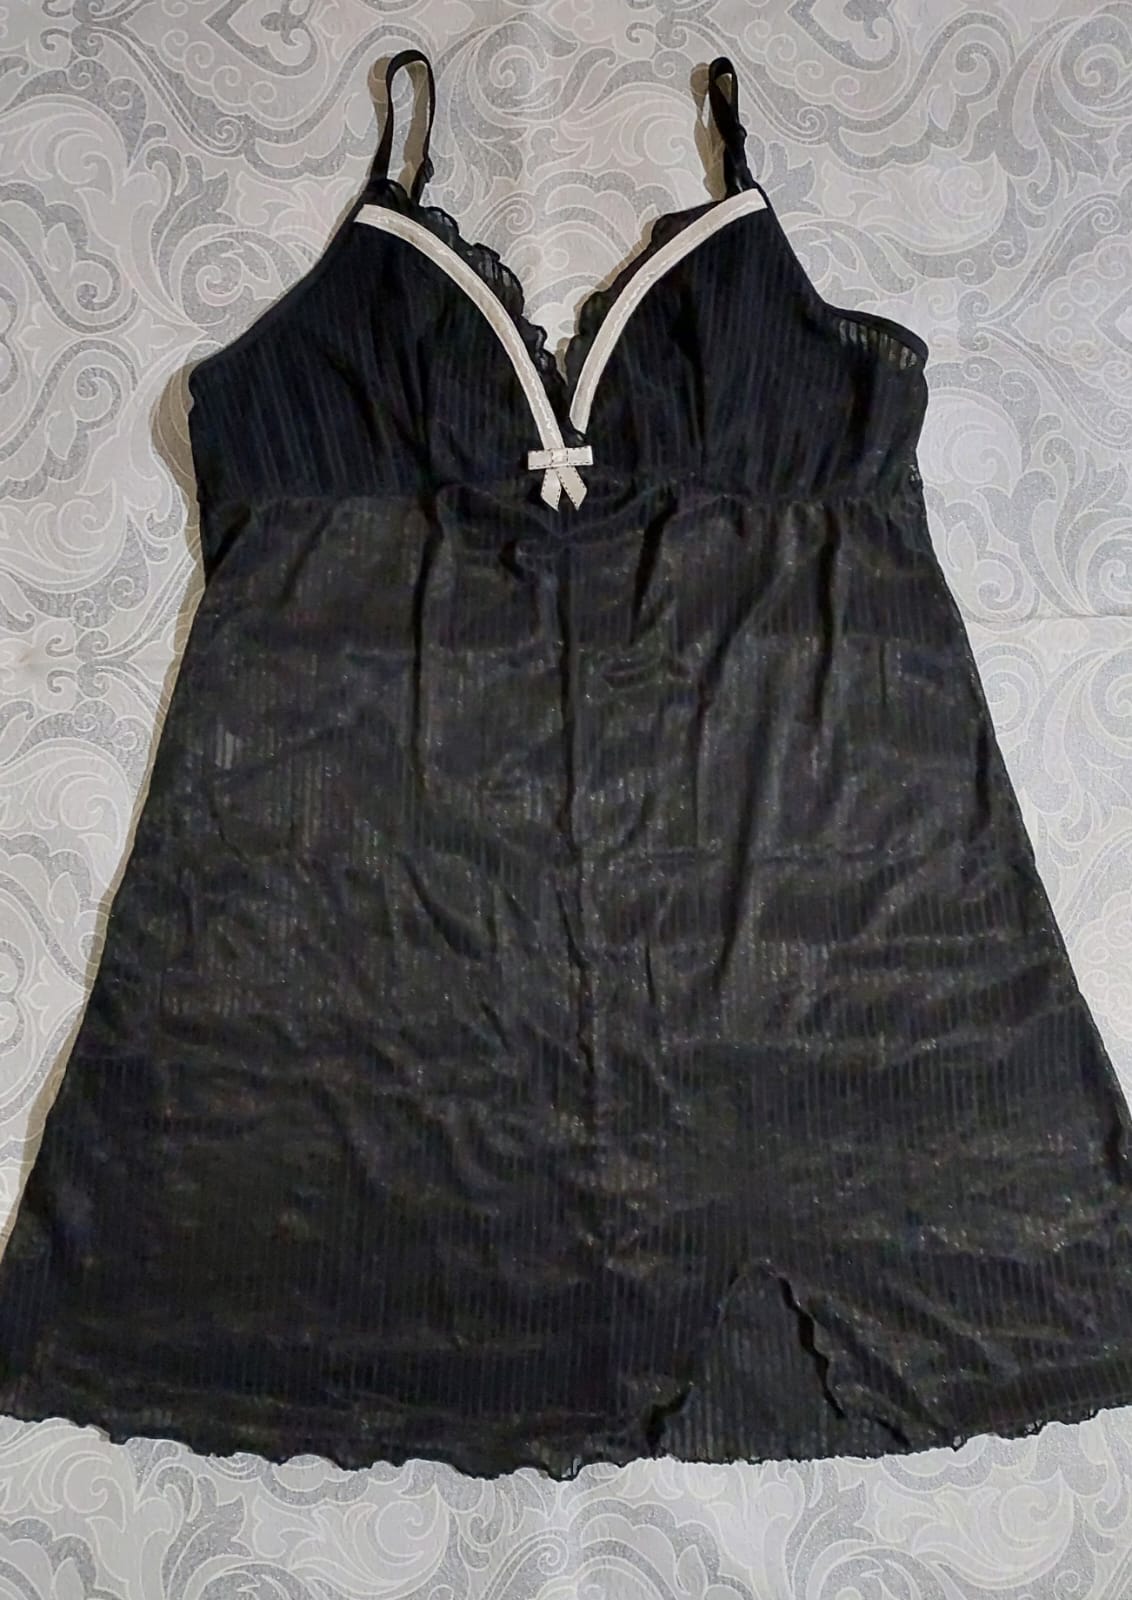 COD: 10431D – Camisola, marca Demillus, com elastano, curta. Cor preta, tamanho M, usada